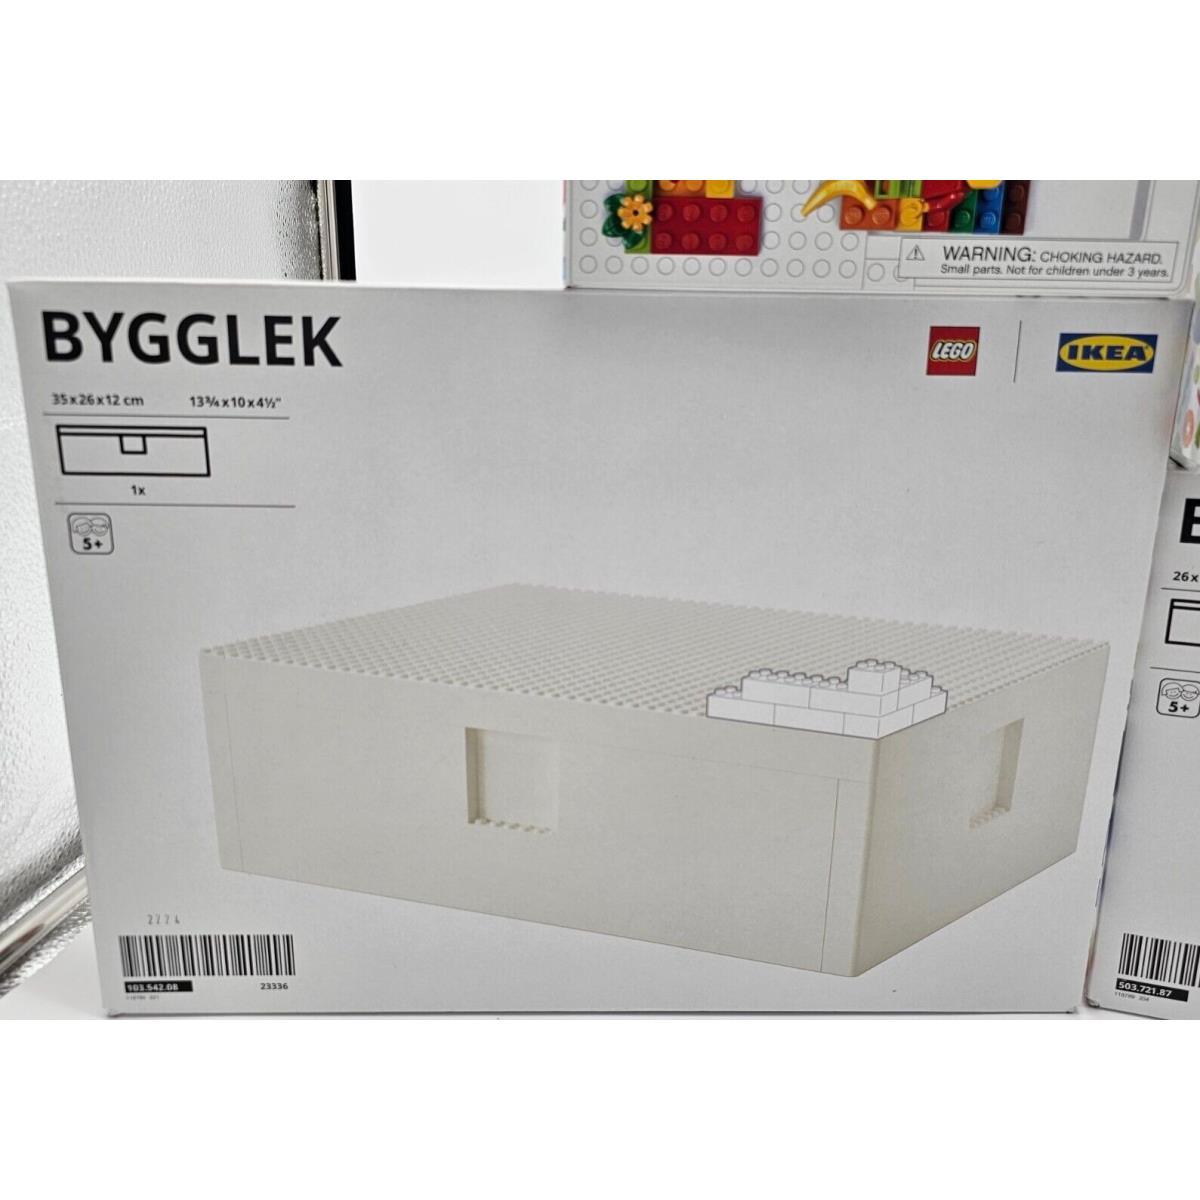 Ikea Bygglek Lego Box with Lid Complete Set White with 201 Bygglek Lego Set